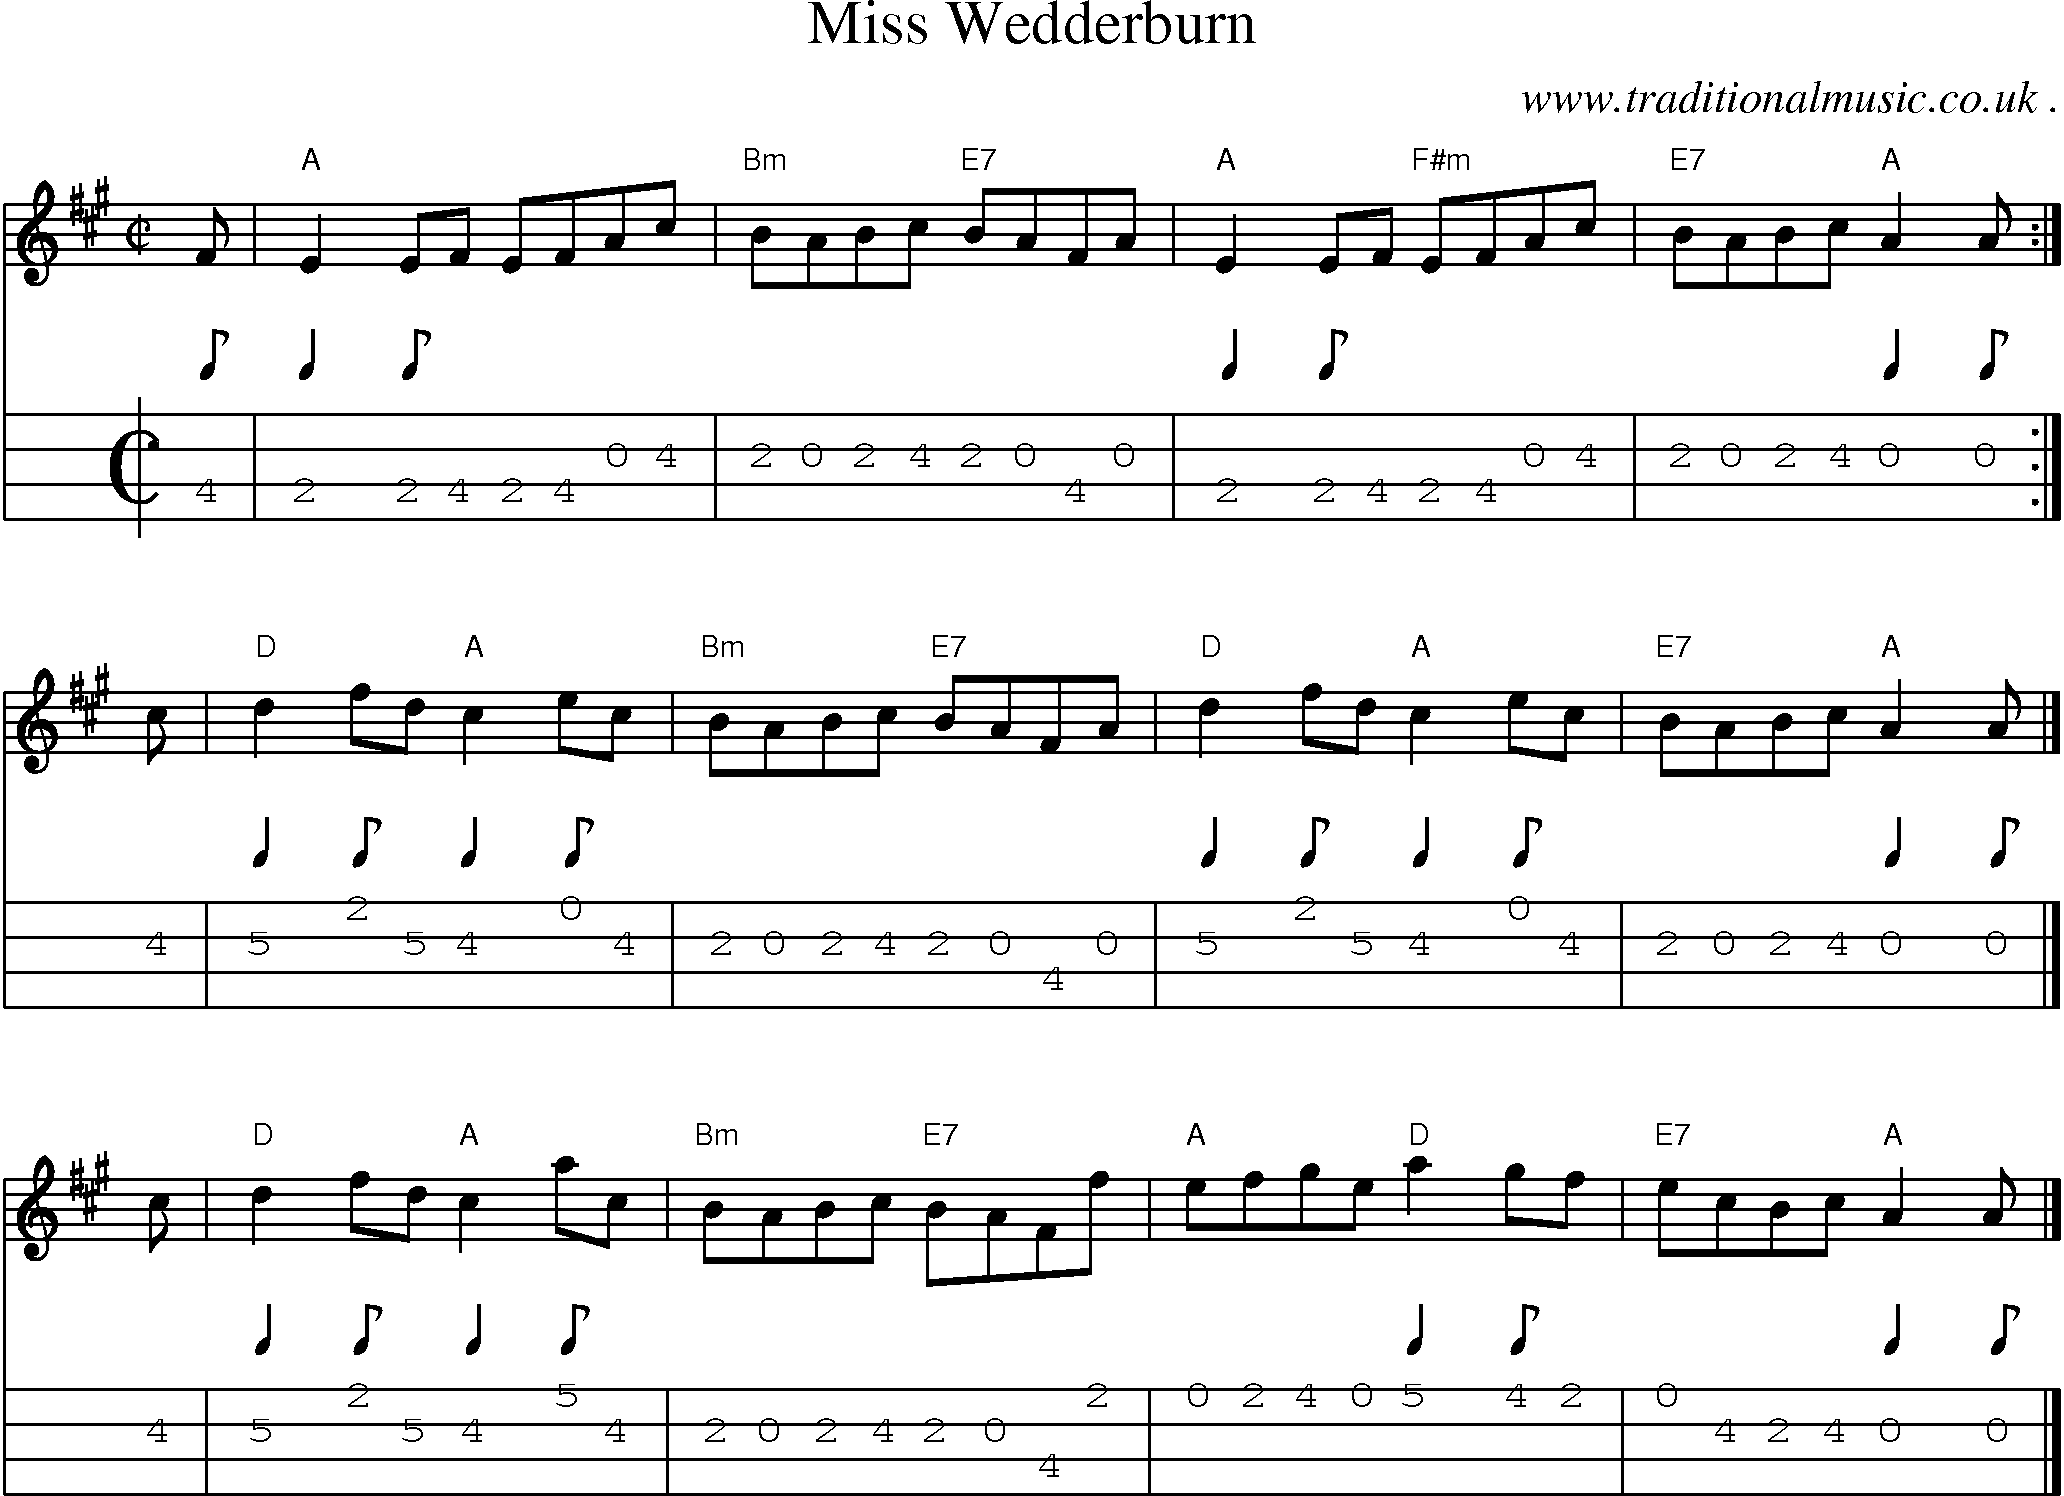 Sheet-music  score, Chords and Mandolin Tabs for Miss Wedderburn